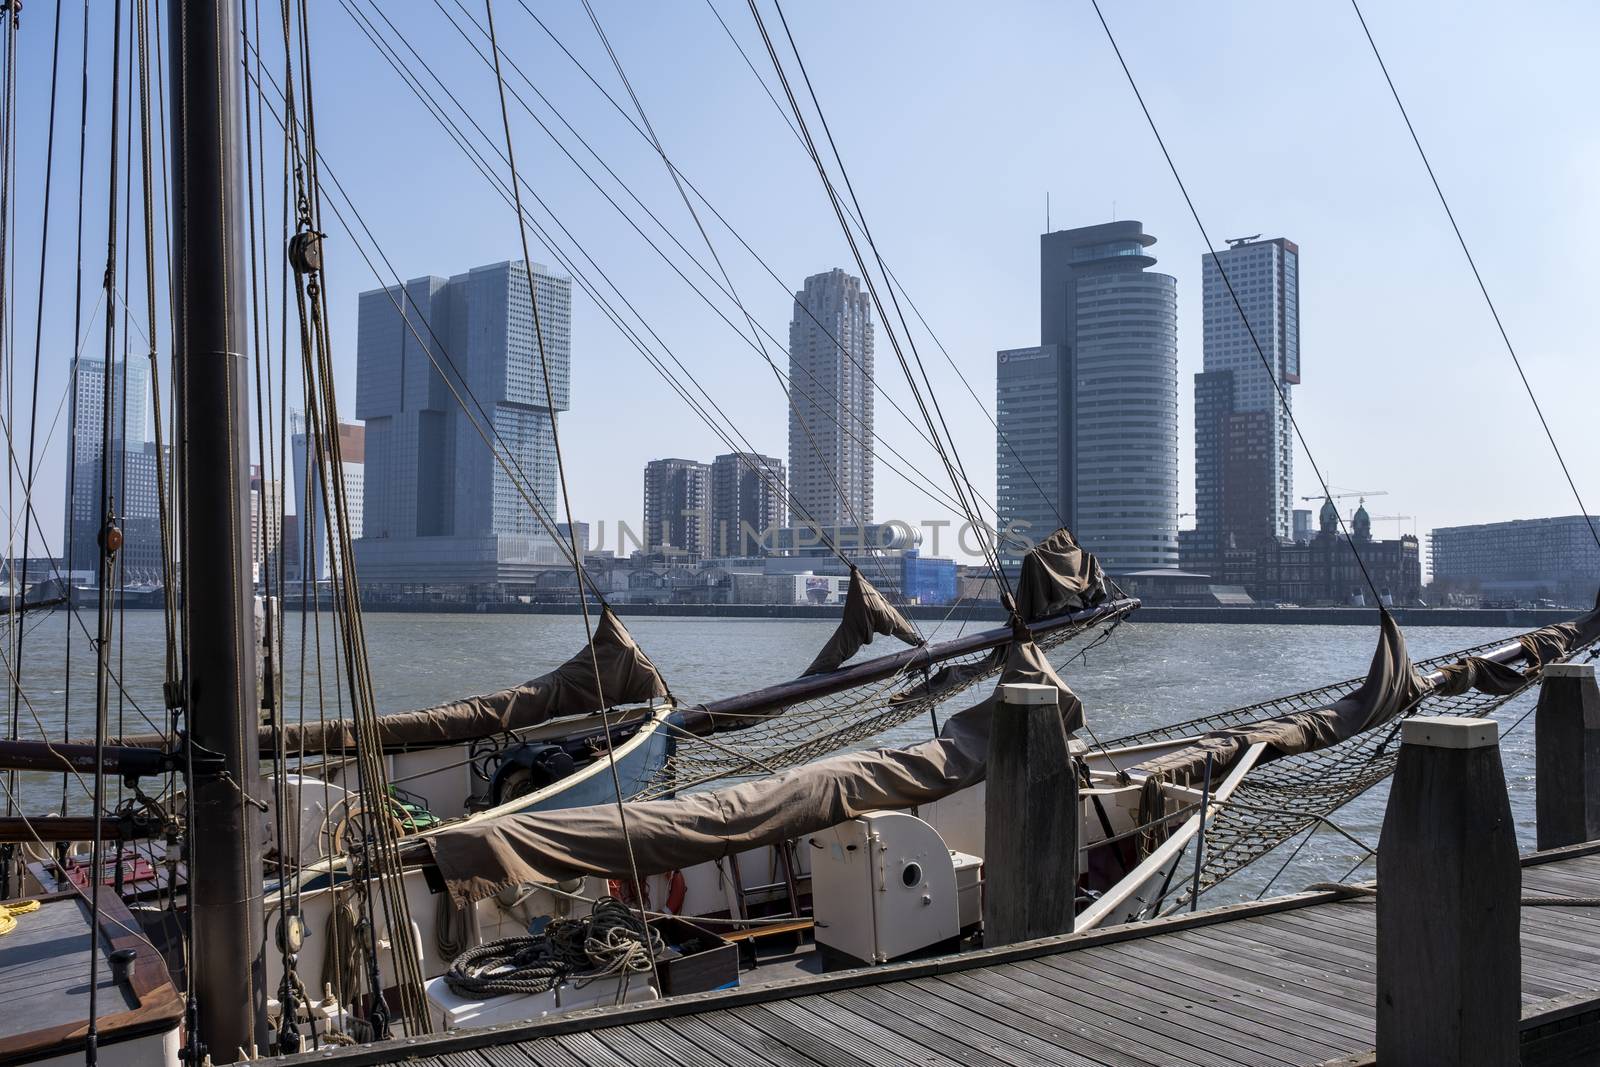 Cityscape of Rotterdam, viewing 'de kop van zuid' from the river by Tjeerdkruse